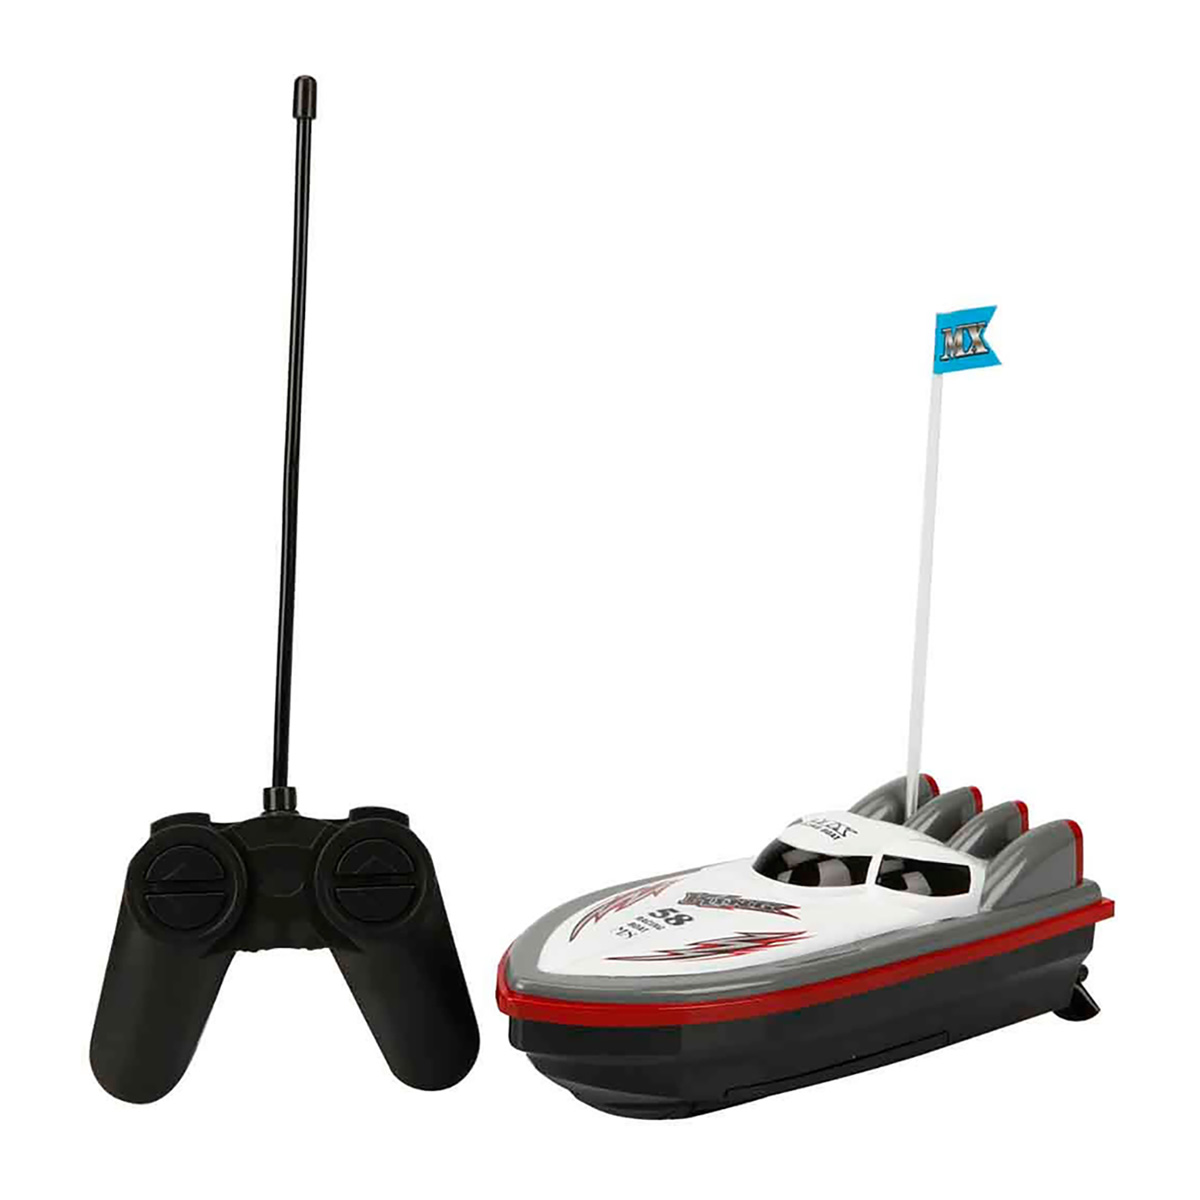 Barca cu telecomanda, Suncon, Alb-Gri, 20 cm alb/gri